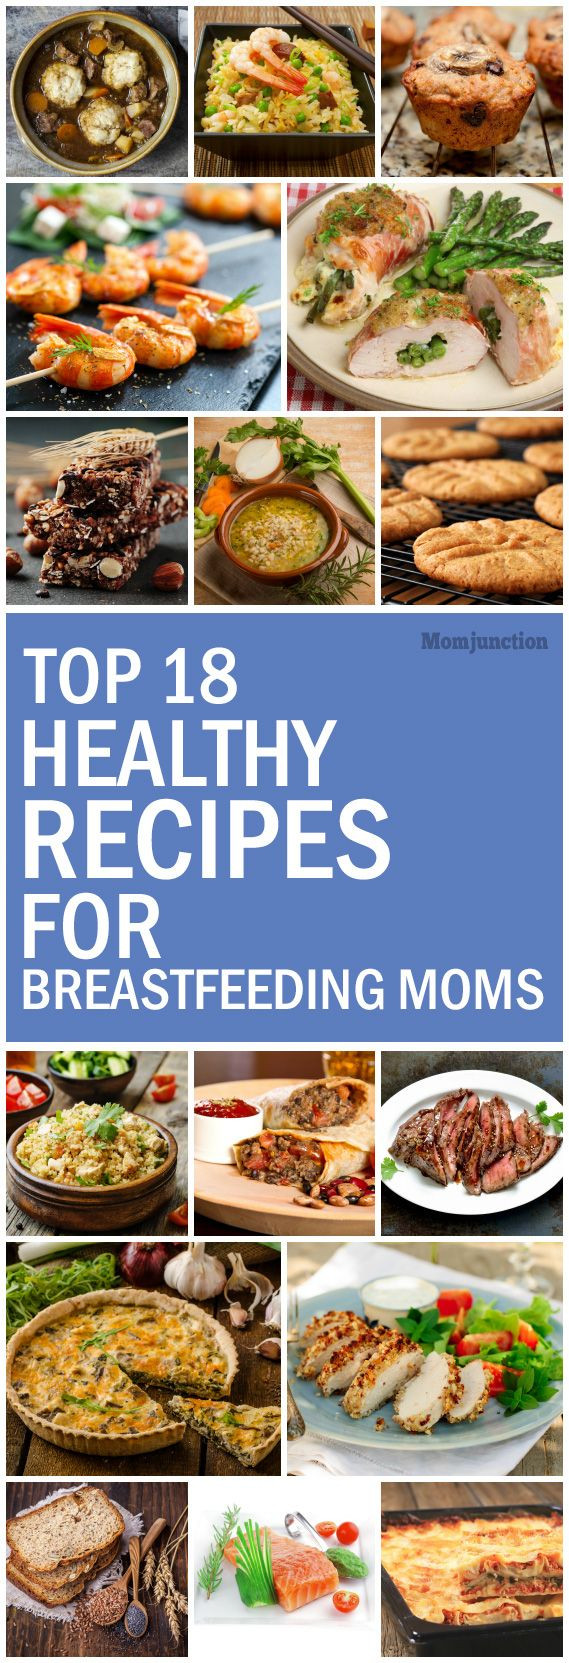 Healthy Breastfeeding Snacks
 Top 18 Healthy Recipes For Breastfeeding Moms